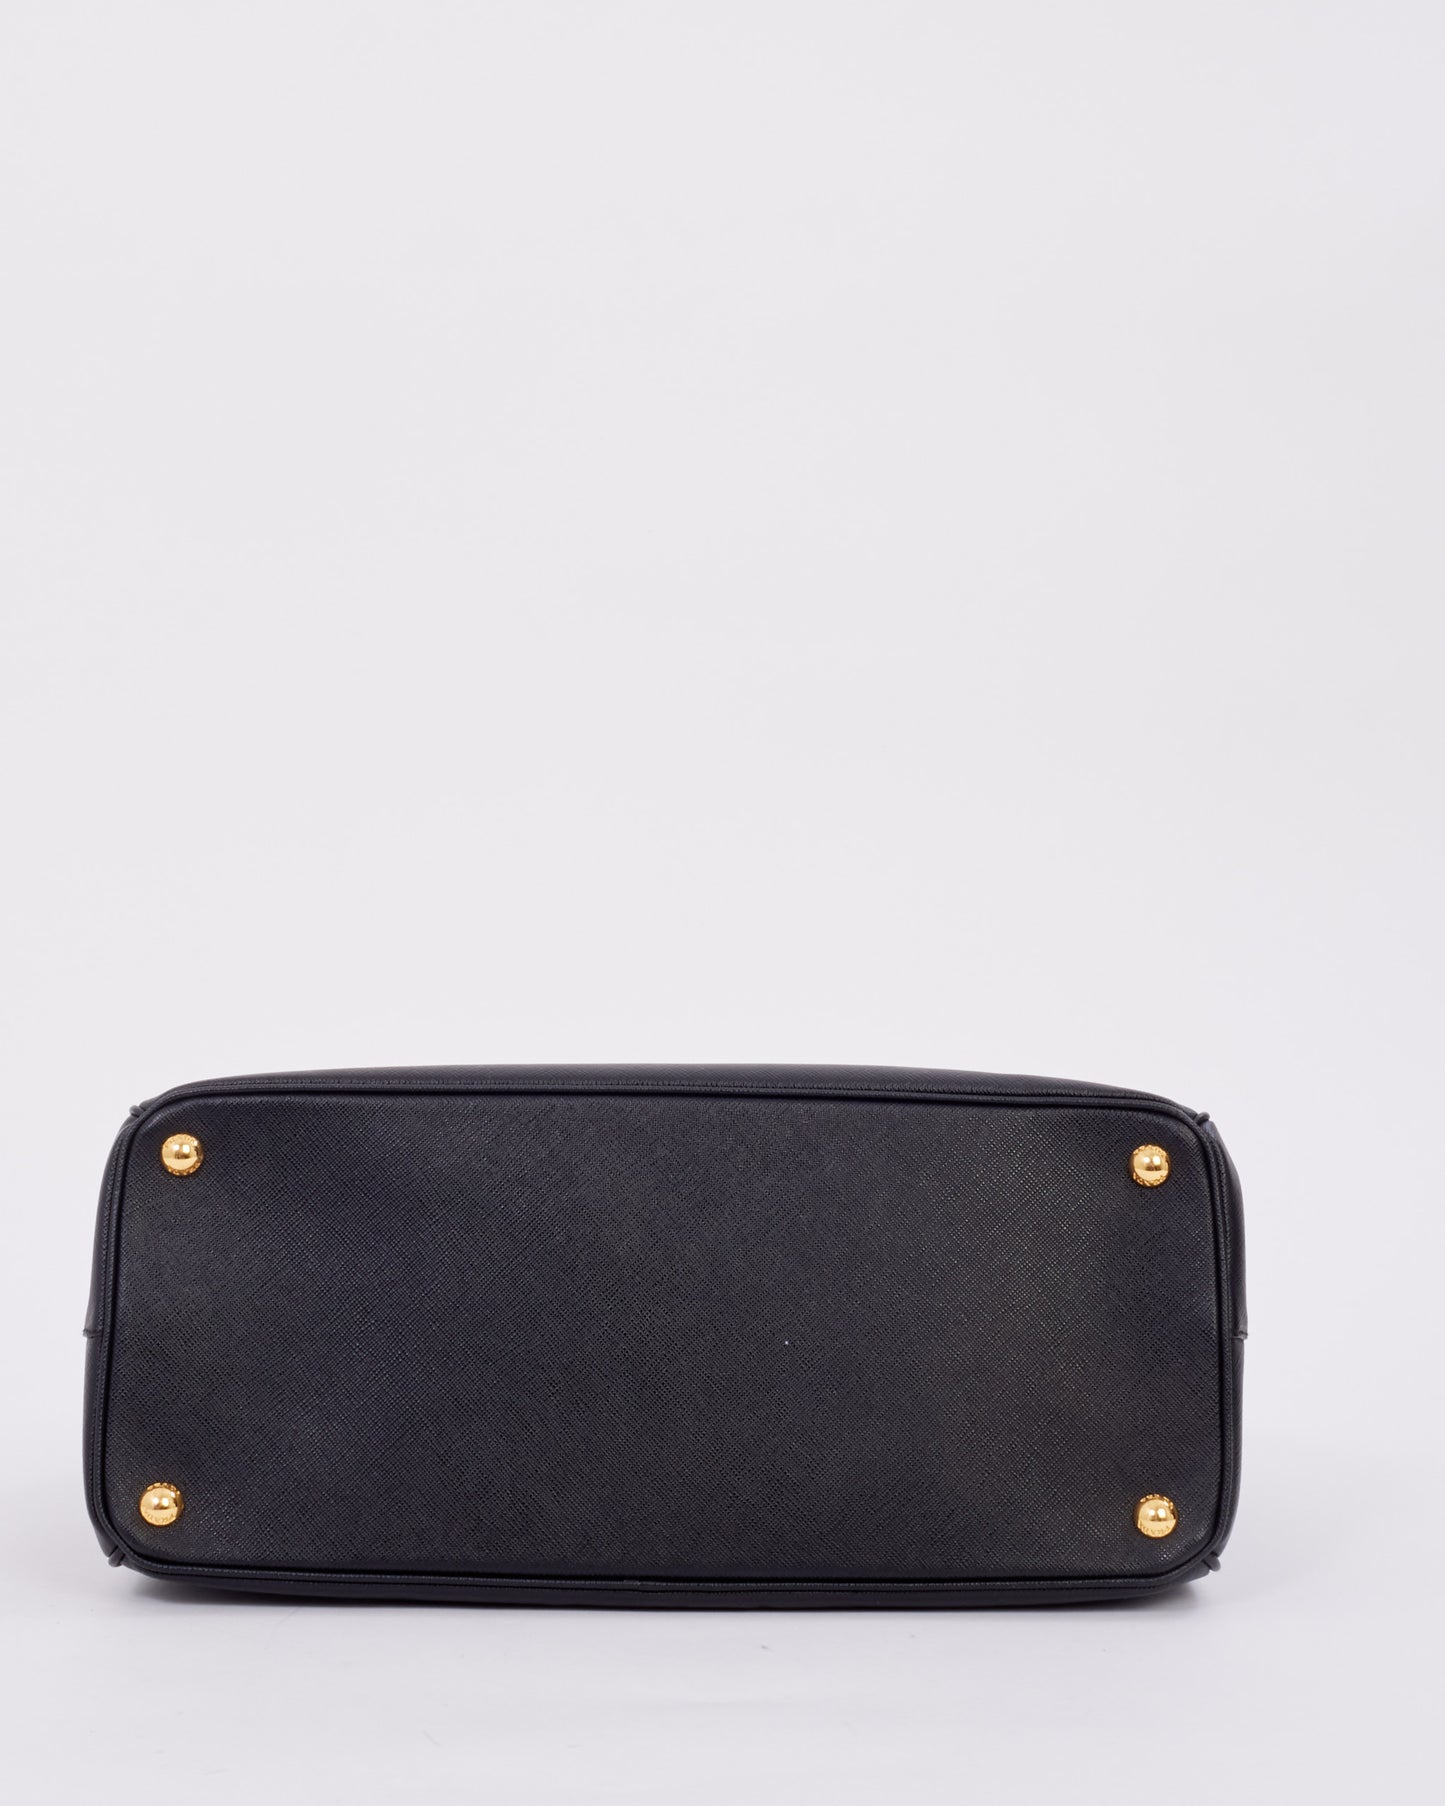 Prada Black Saffiano Leather Double Zip Medium Galleria Top Handle Bag